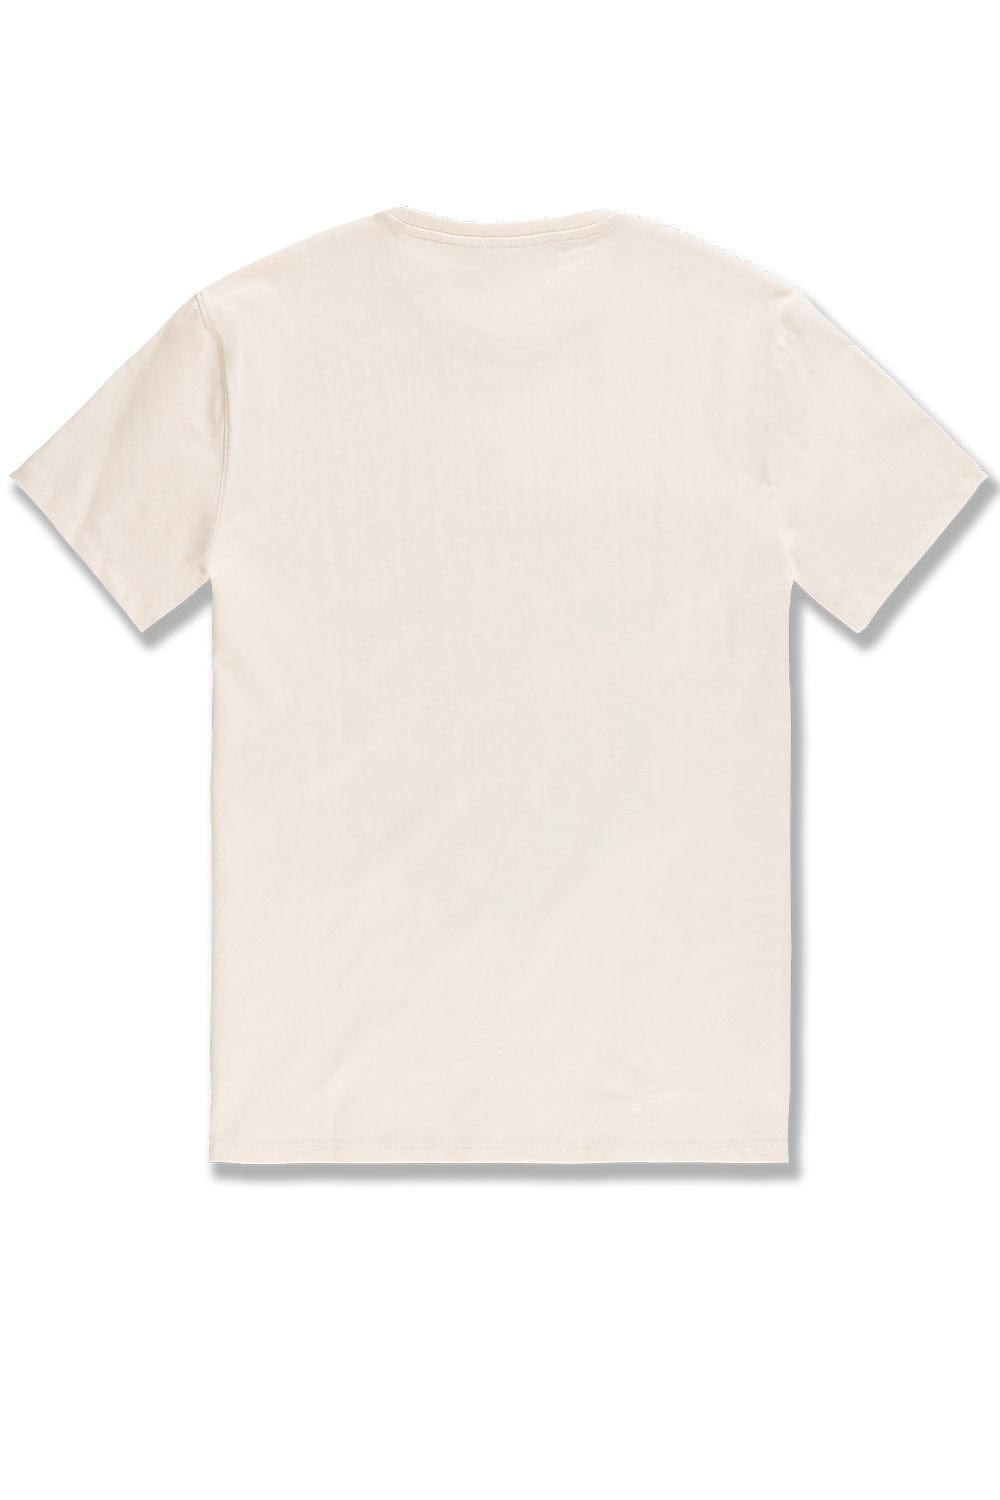 Jordan Craig Blak Panther T-Shirt (Cream)